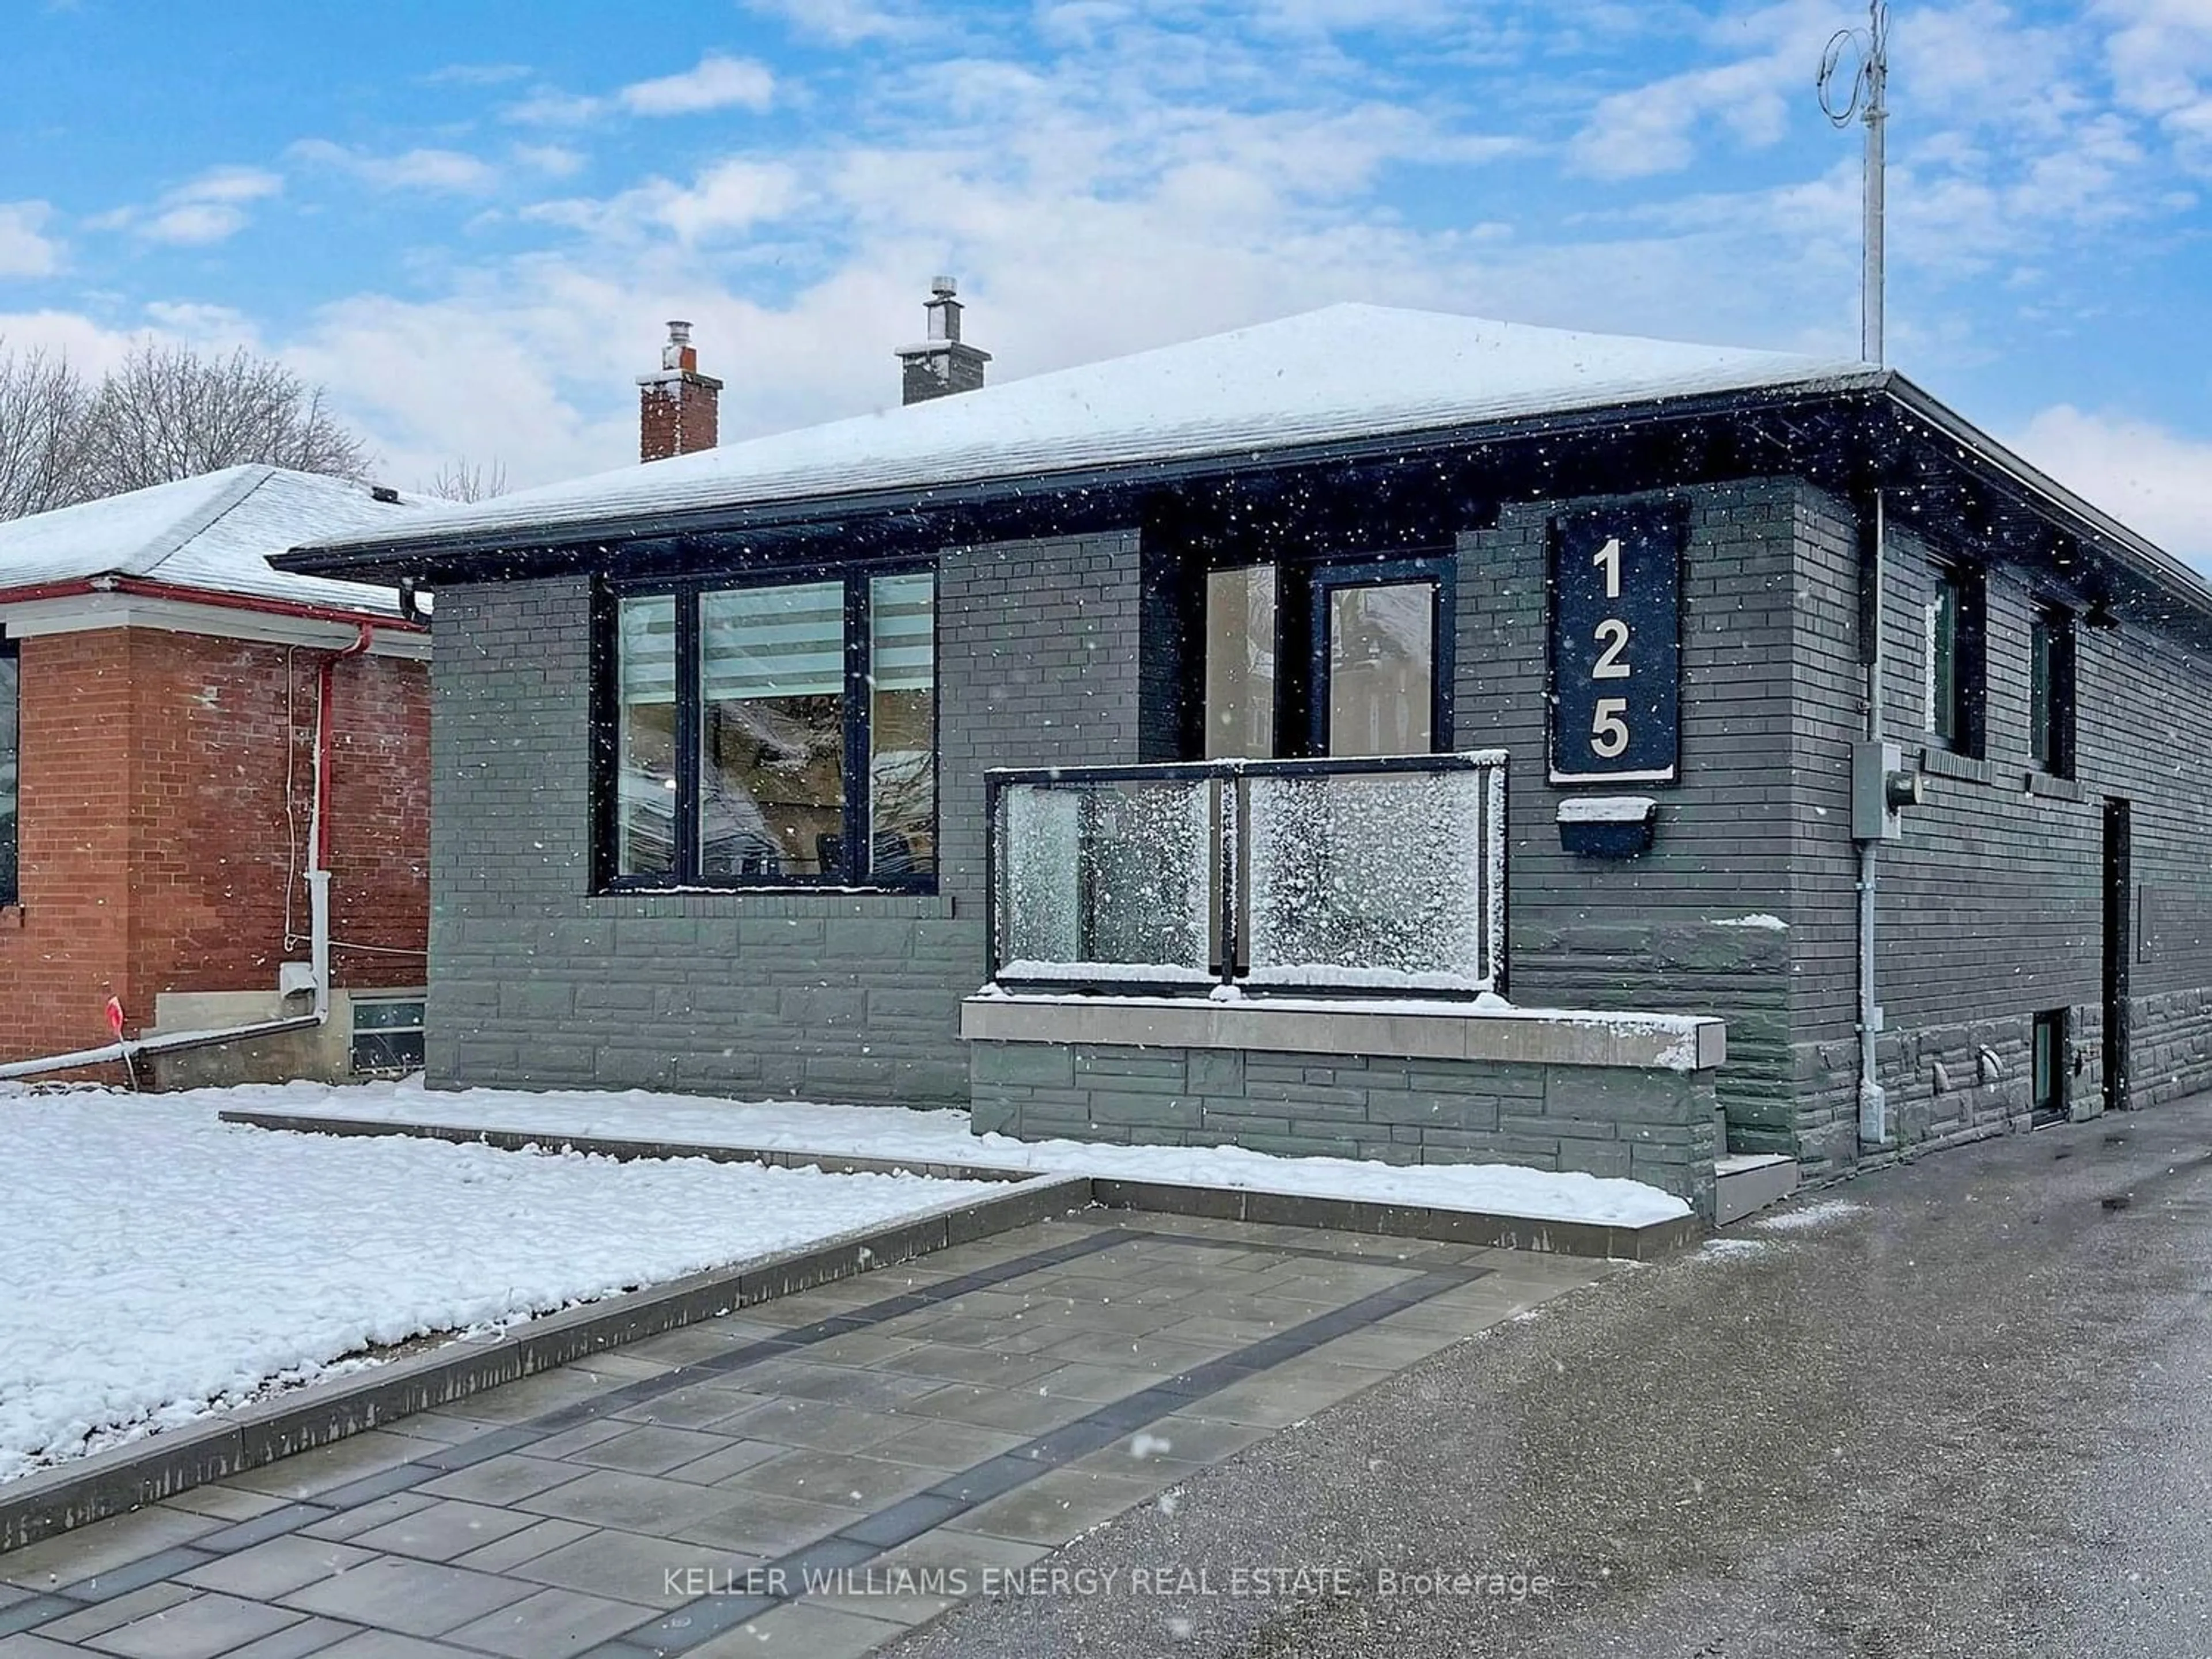 Home with unknown exterior material for 125 Pandora Circ, Toronto Ontario M1H 1V8